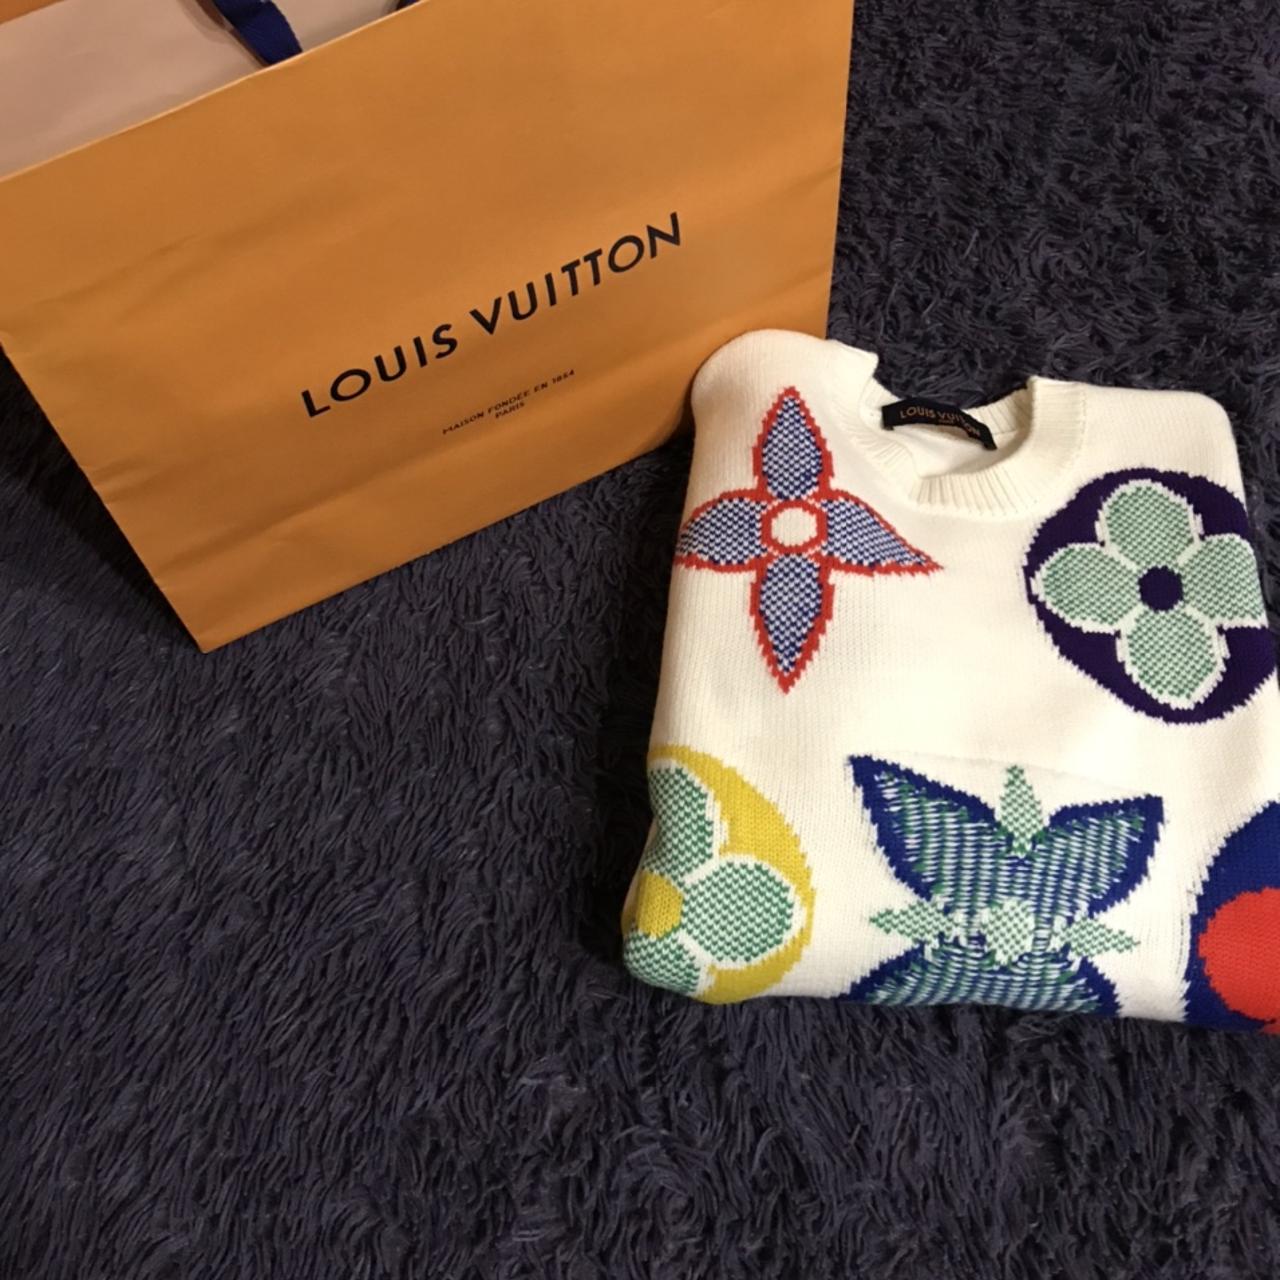 Louis Vuitton Colorful Monogram Sweater